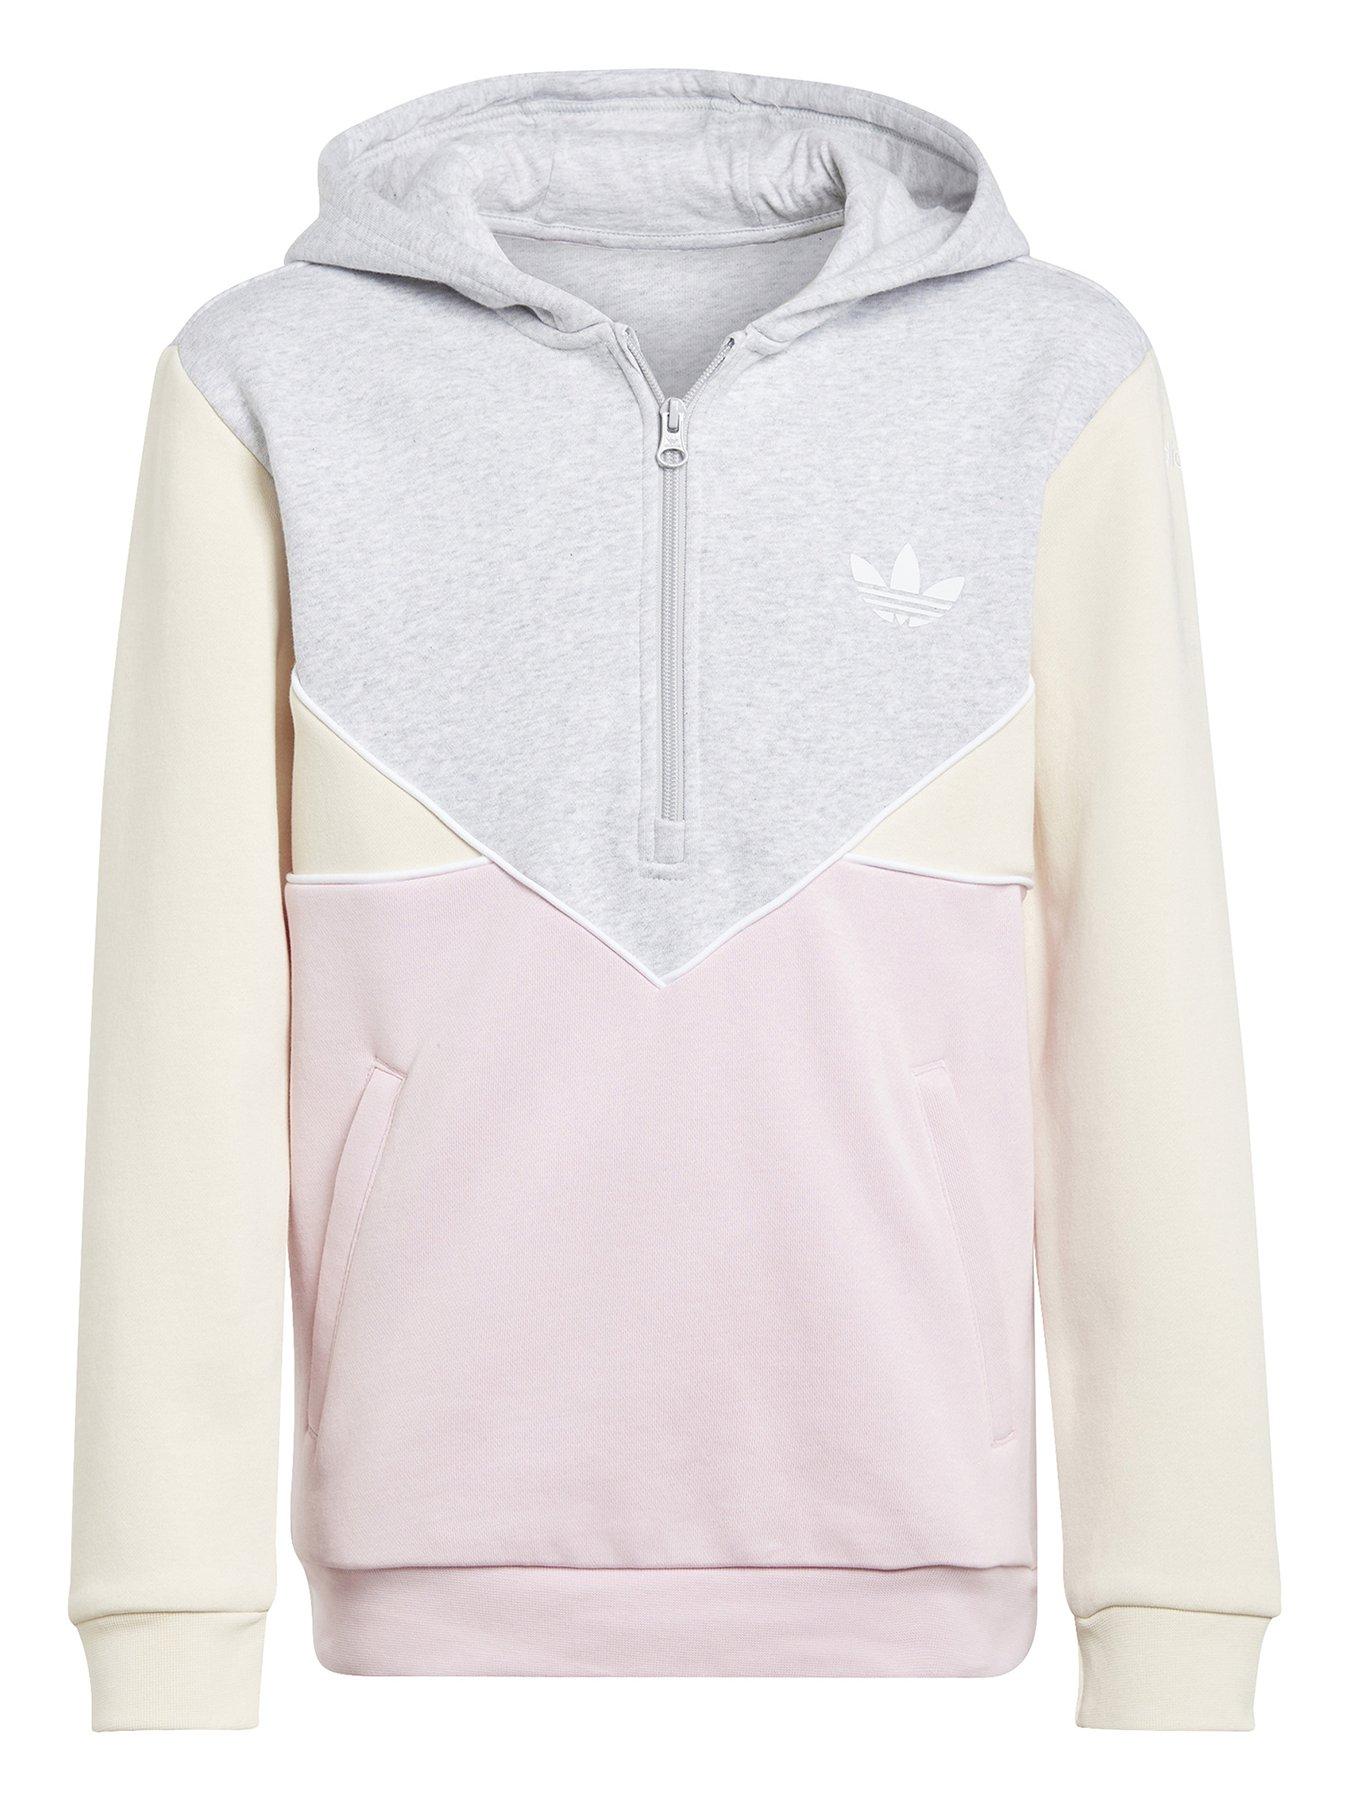 Pink | & sweatshirts & | | Hoodies Very Ireland Sportswear | Child baby Adidas 